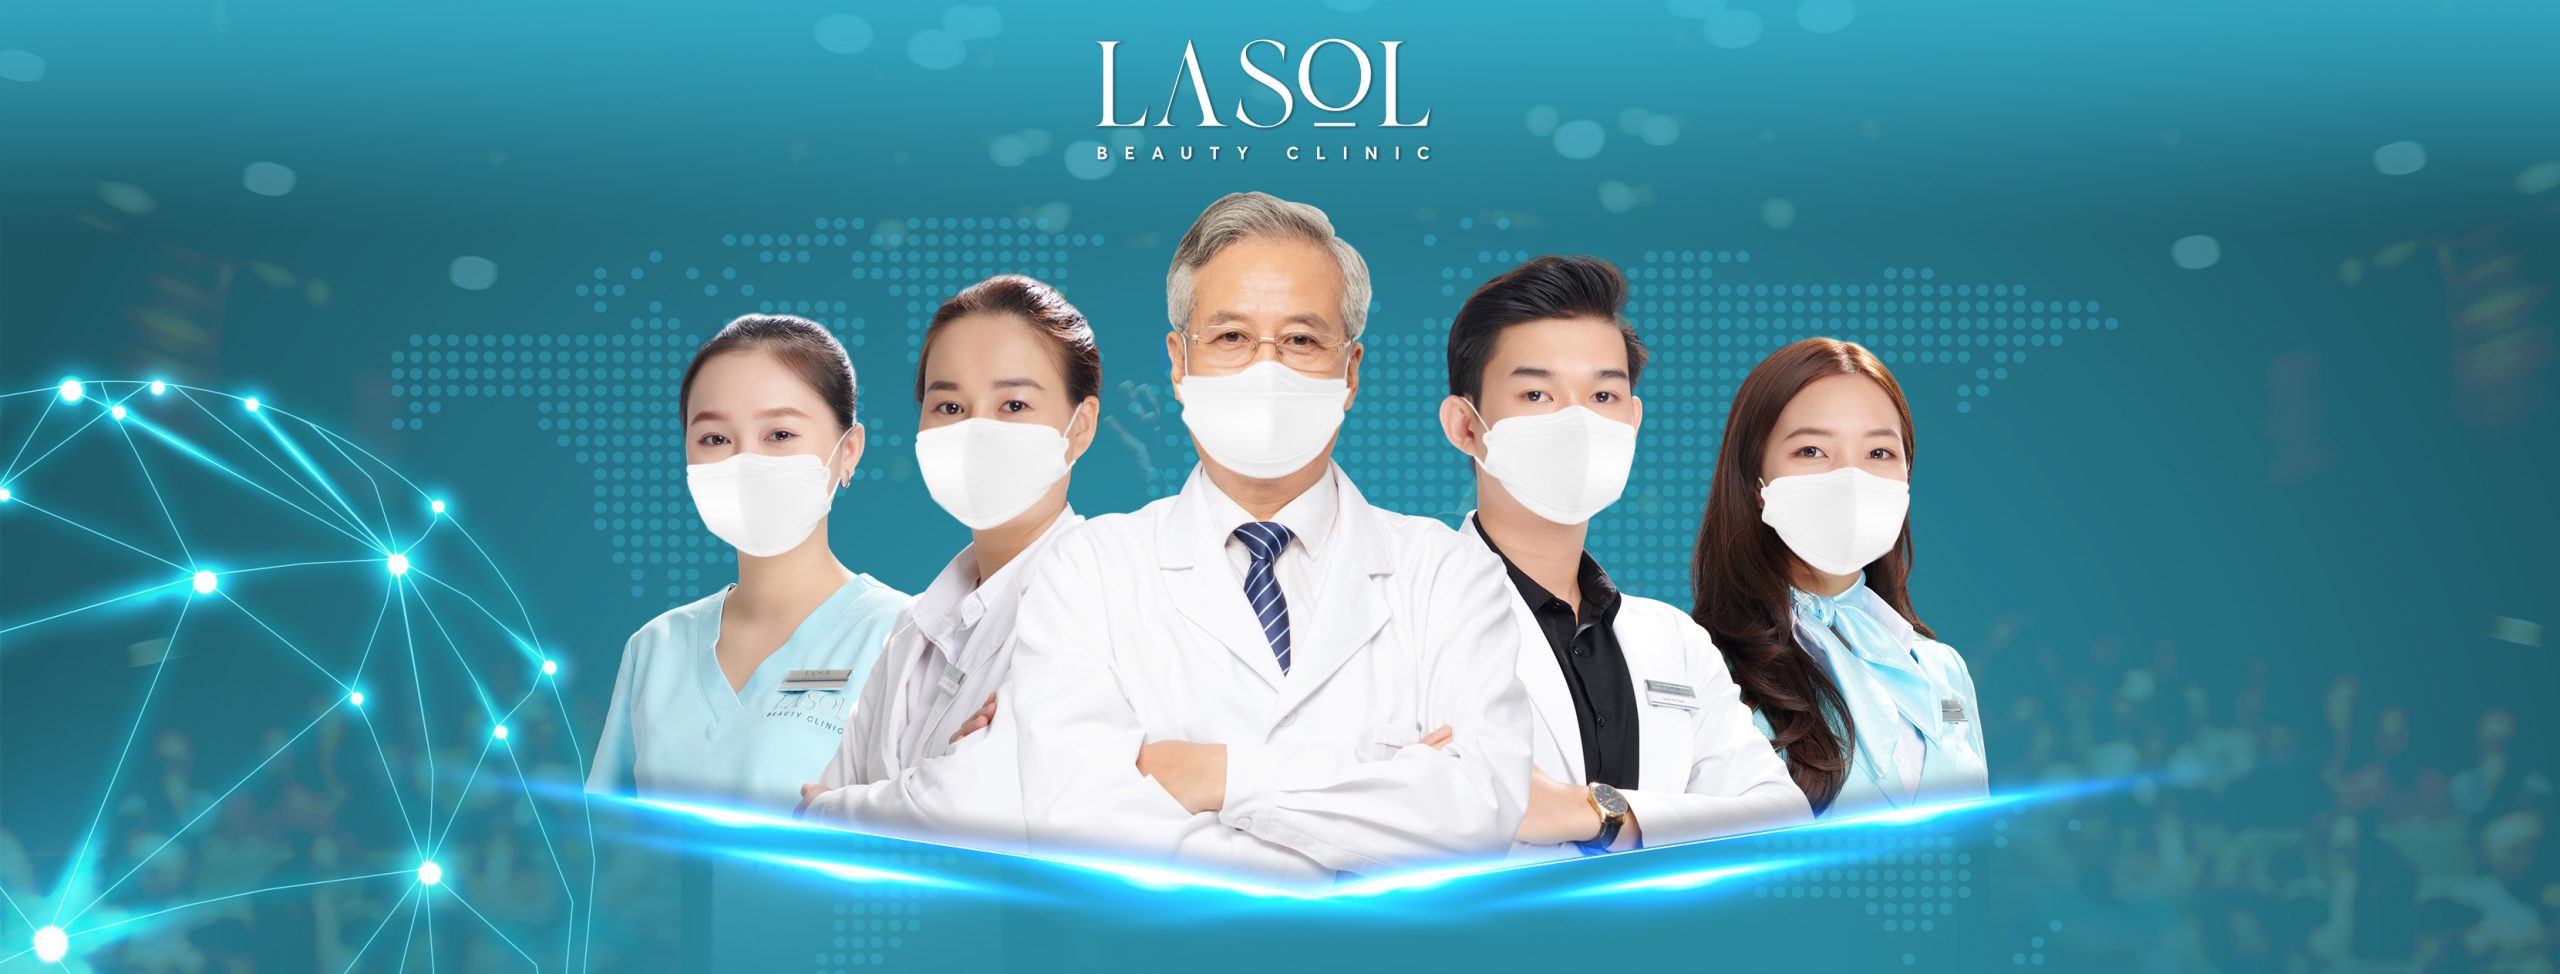 LaSol Beauty Clinic